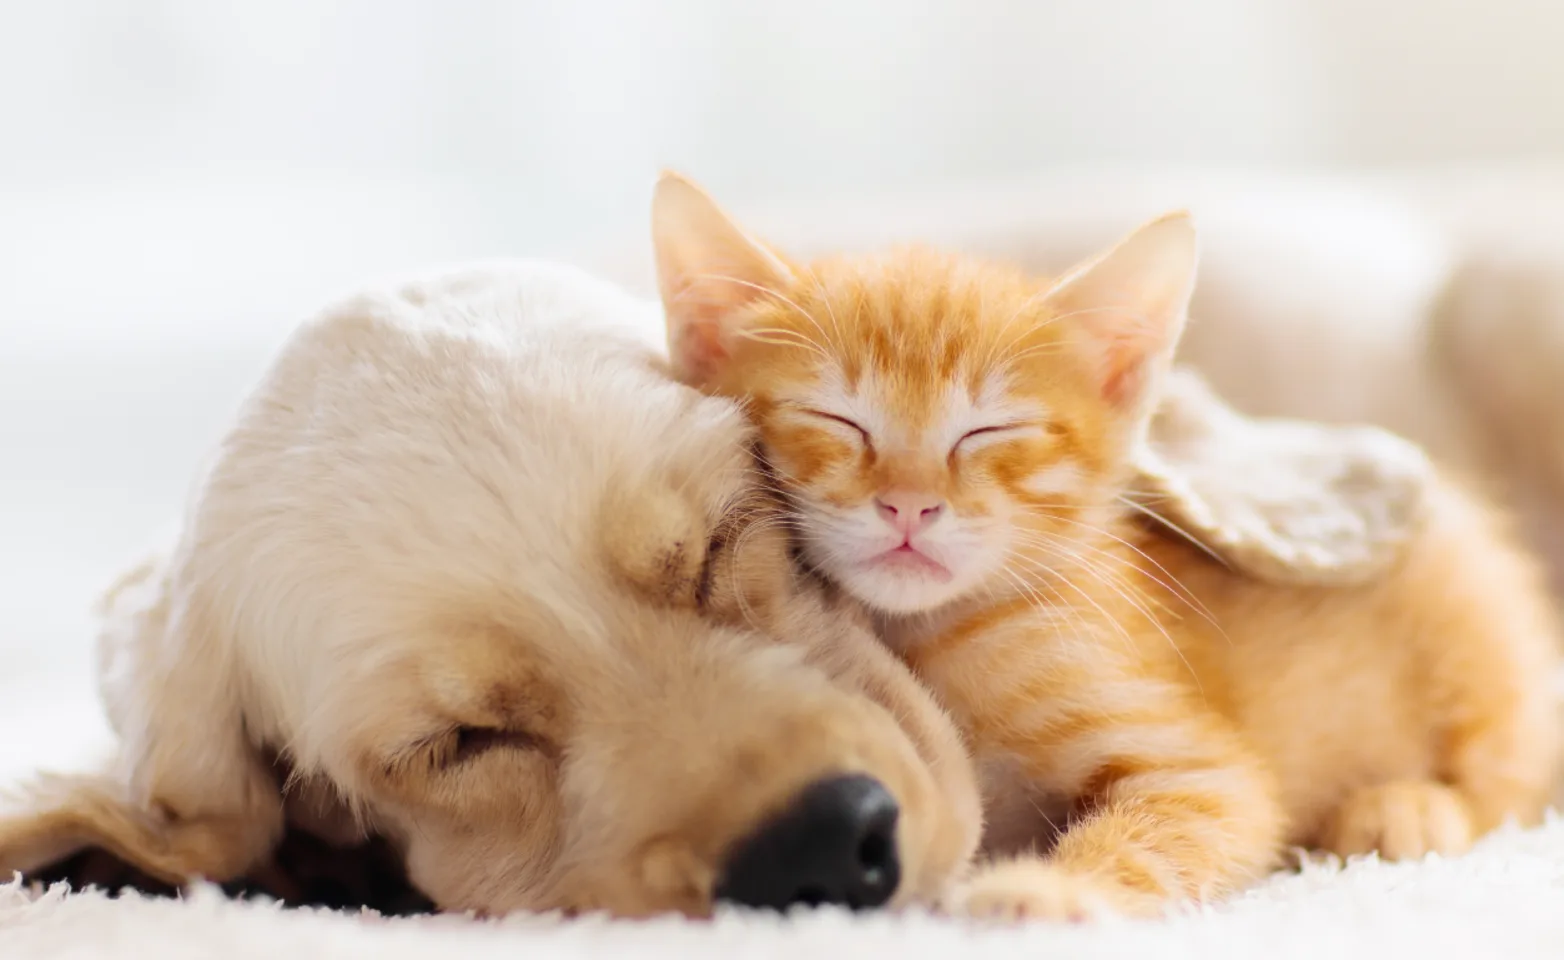 Dog and cat cuddling 